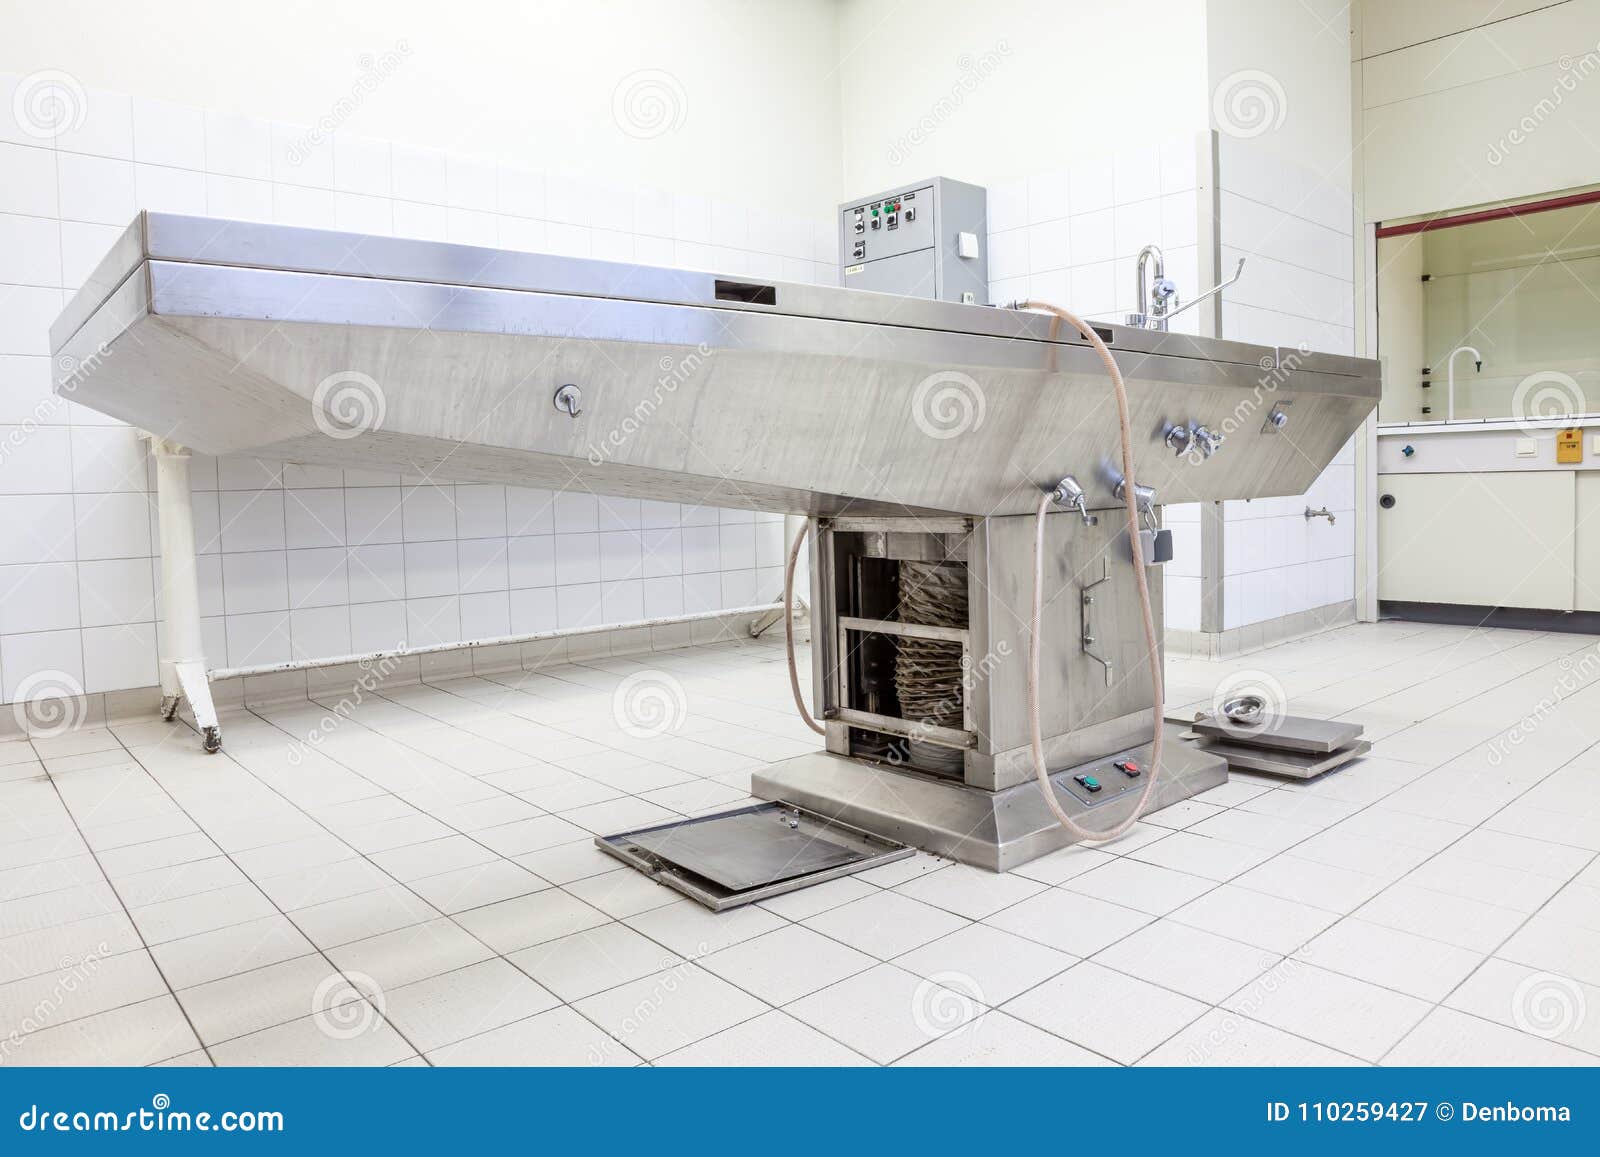 autopsy tables in morgue